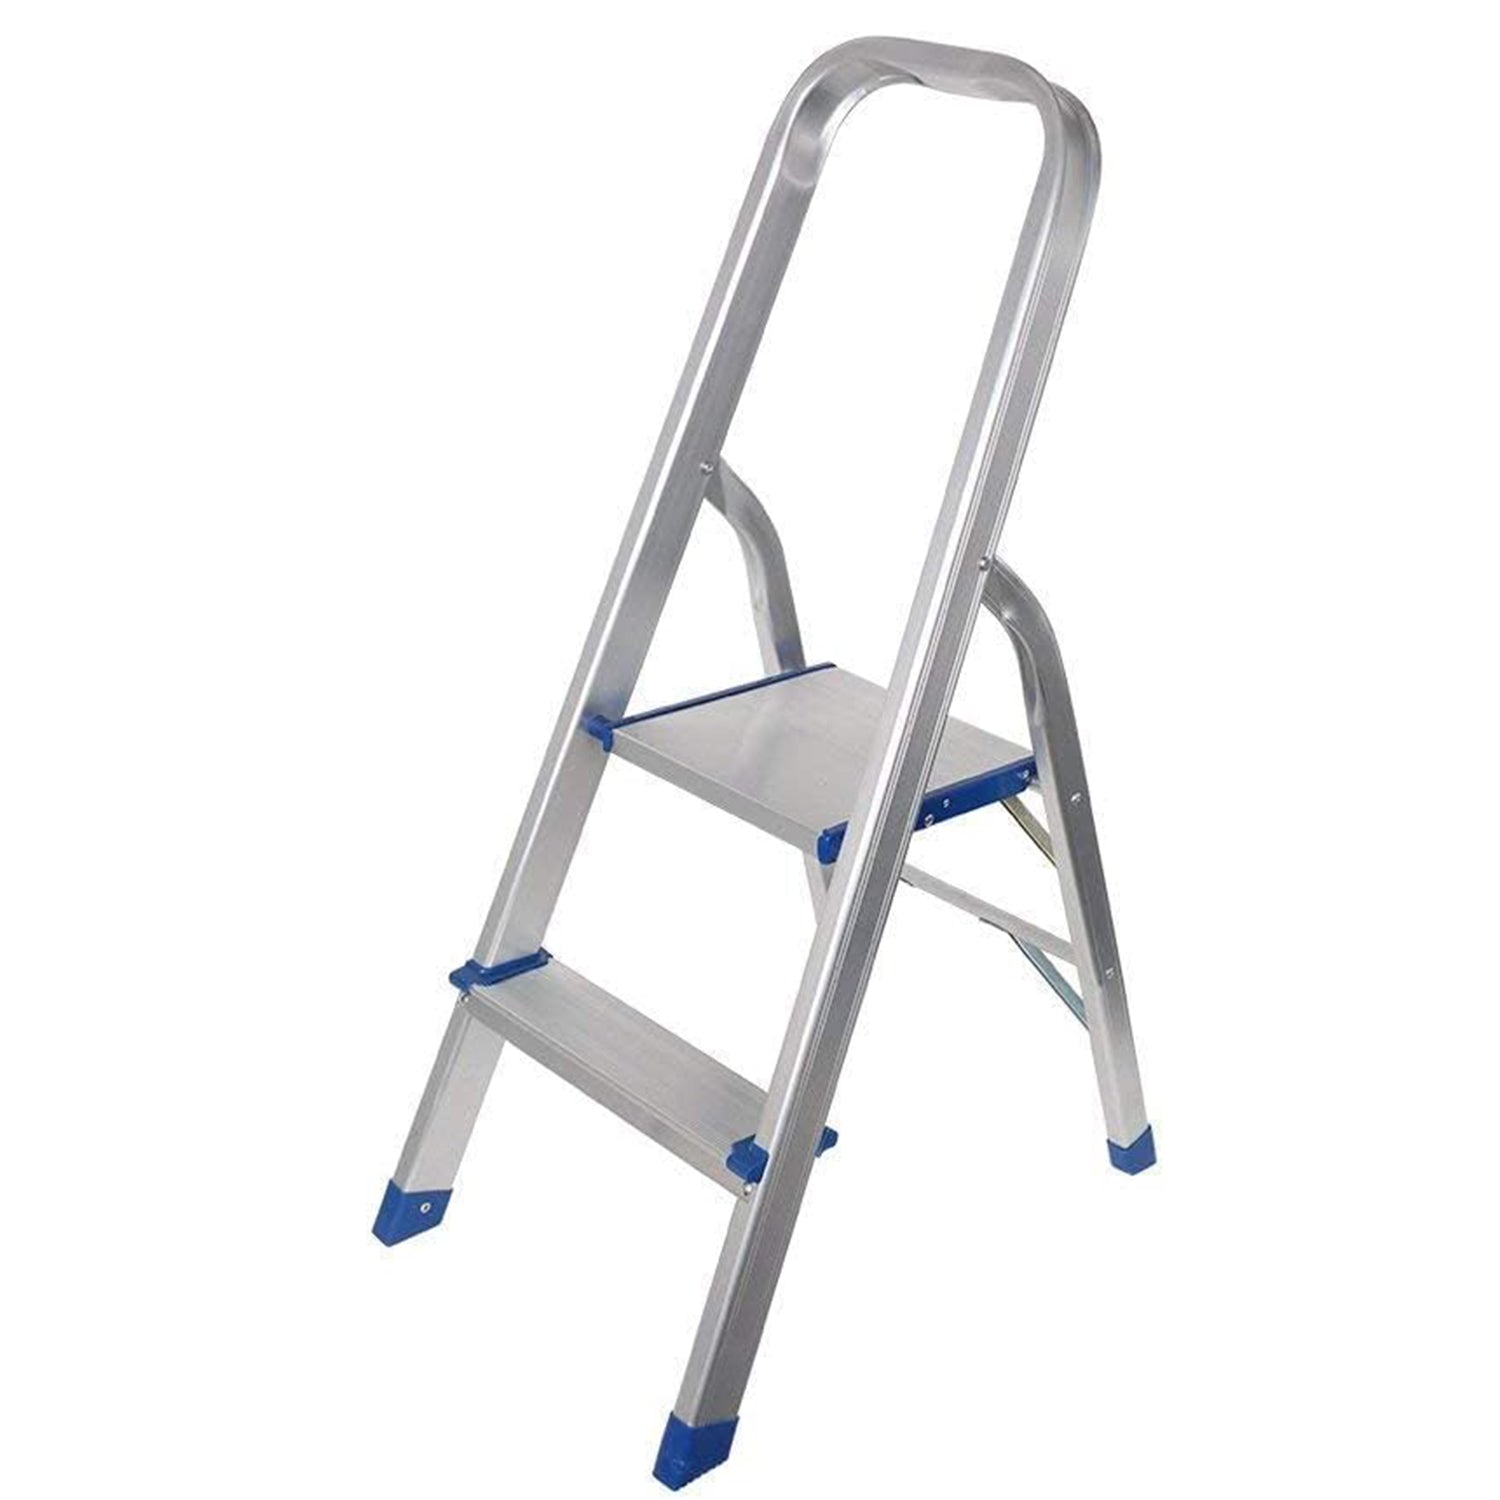 2 Step Ladder Aluminum Folding Step Stool with 330lbs Capacity Anti-Slip Pedal